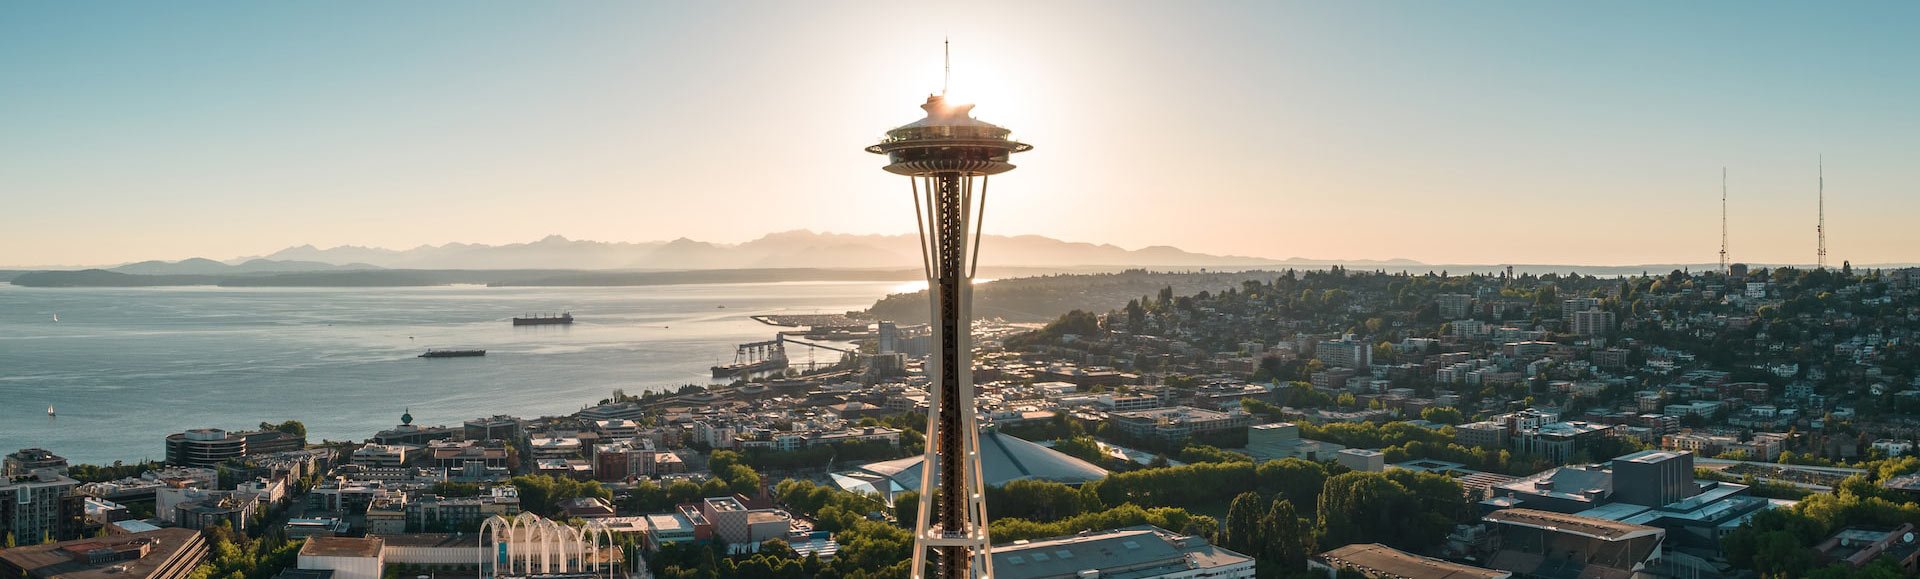 Seattle Skyline med Space Needle